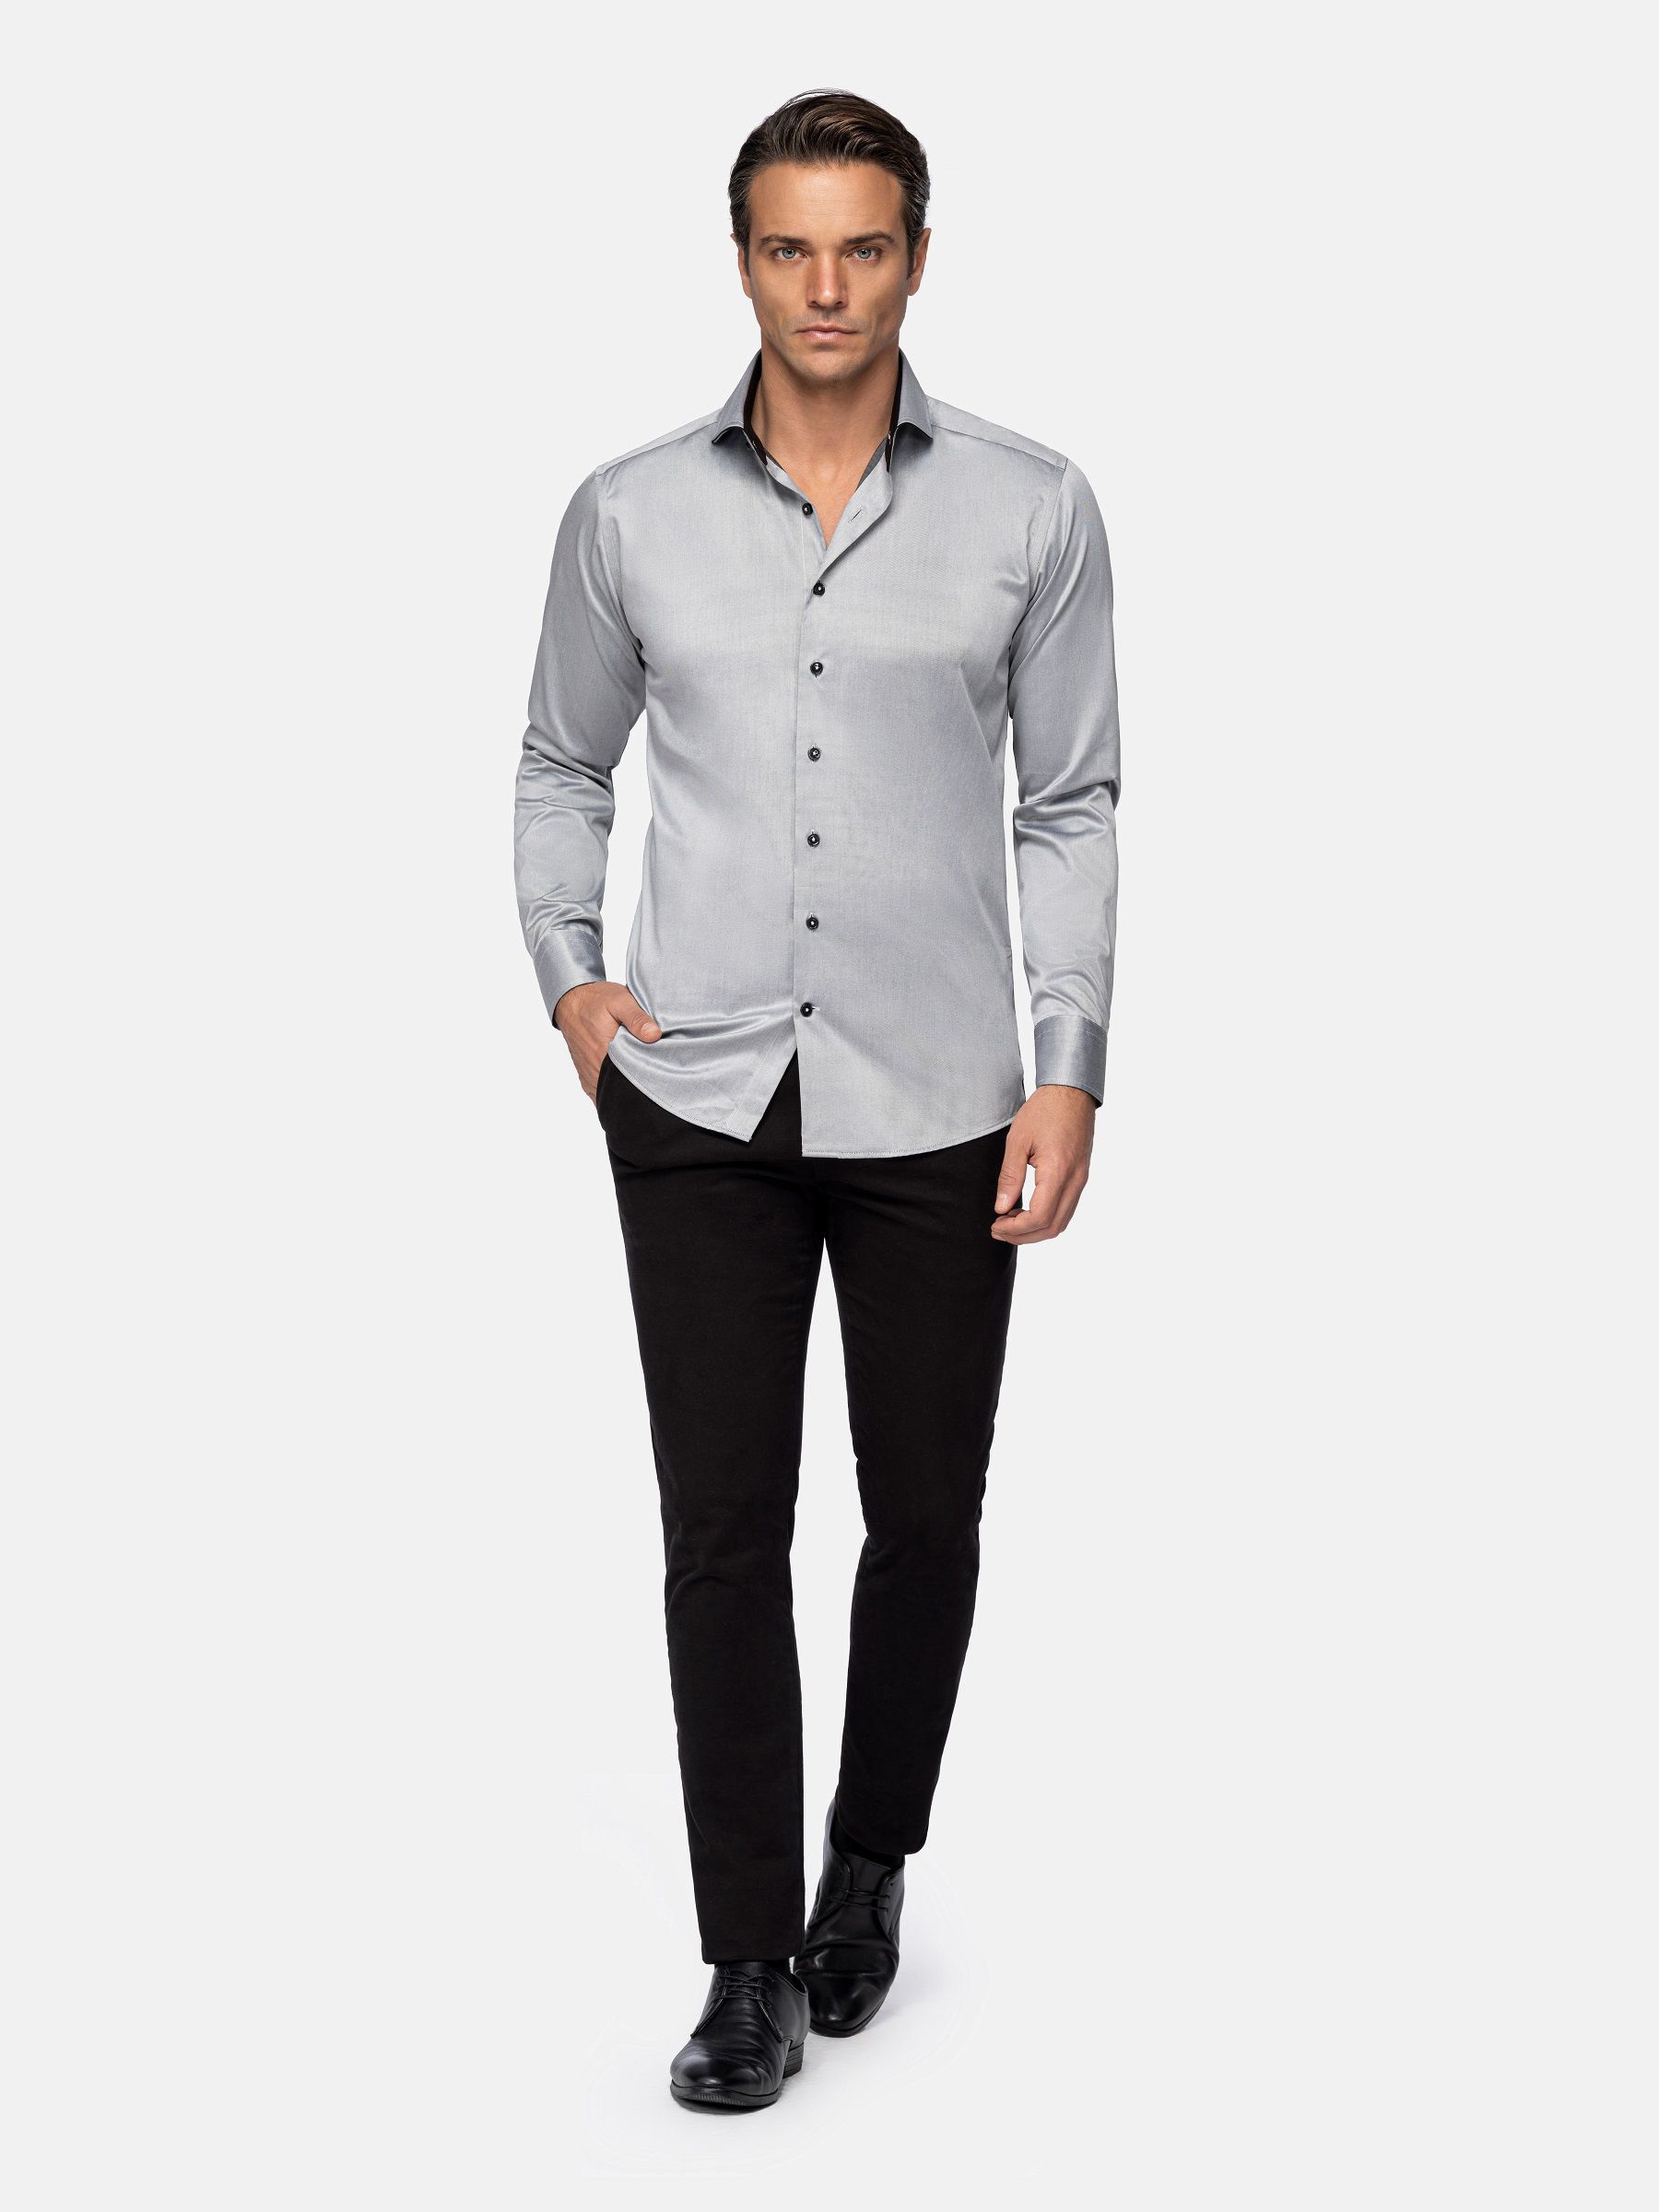 Solid Grey Long Sleeve Shirt